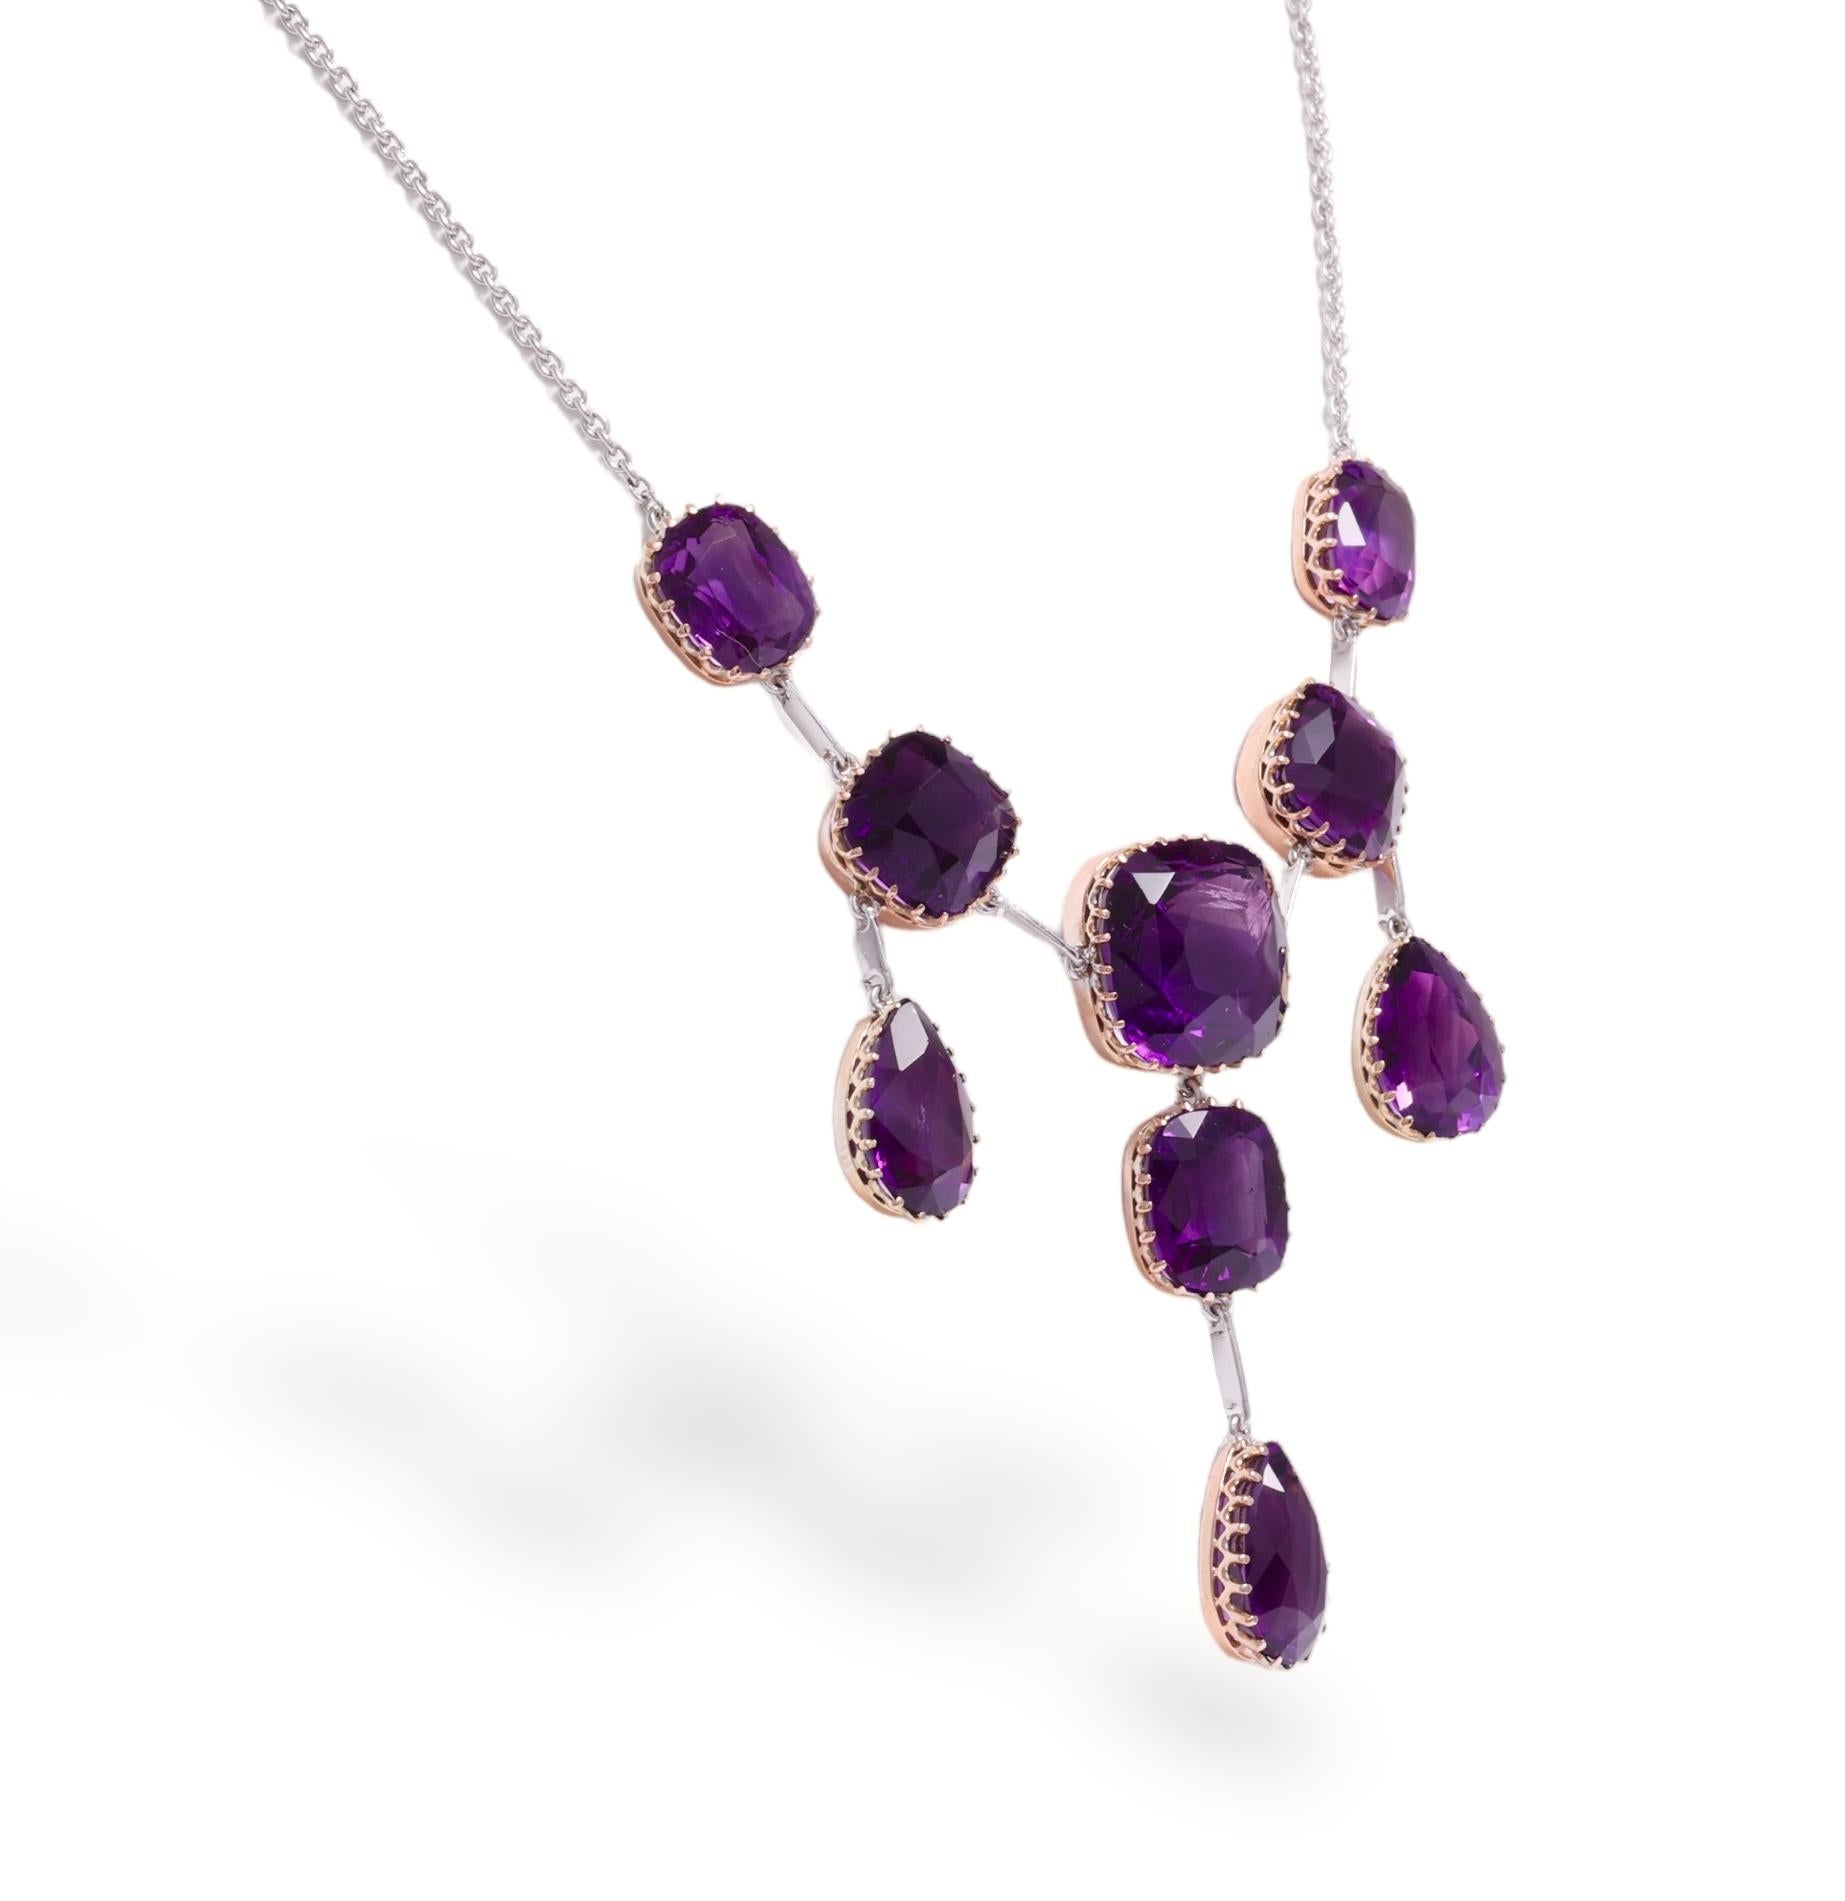 Women's Gorgeous Platinum / Gold Chandelier Drop Necklace With 55 ct. Amethyst Gemstones For Sale